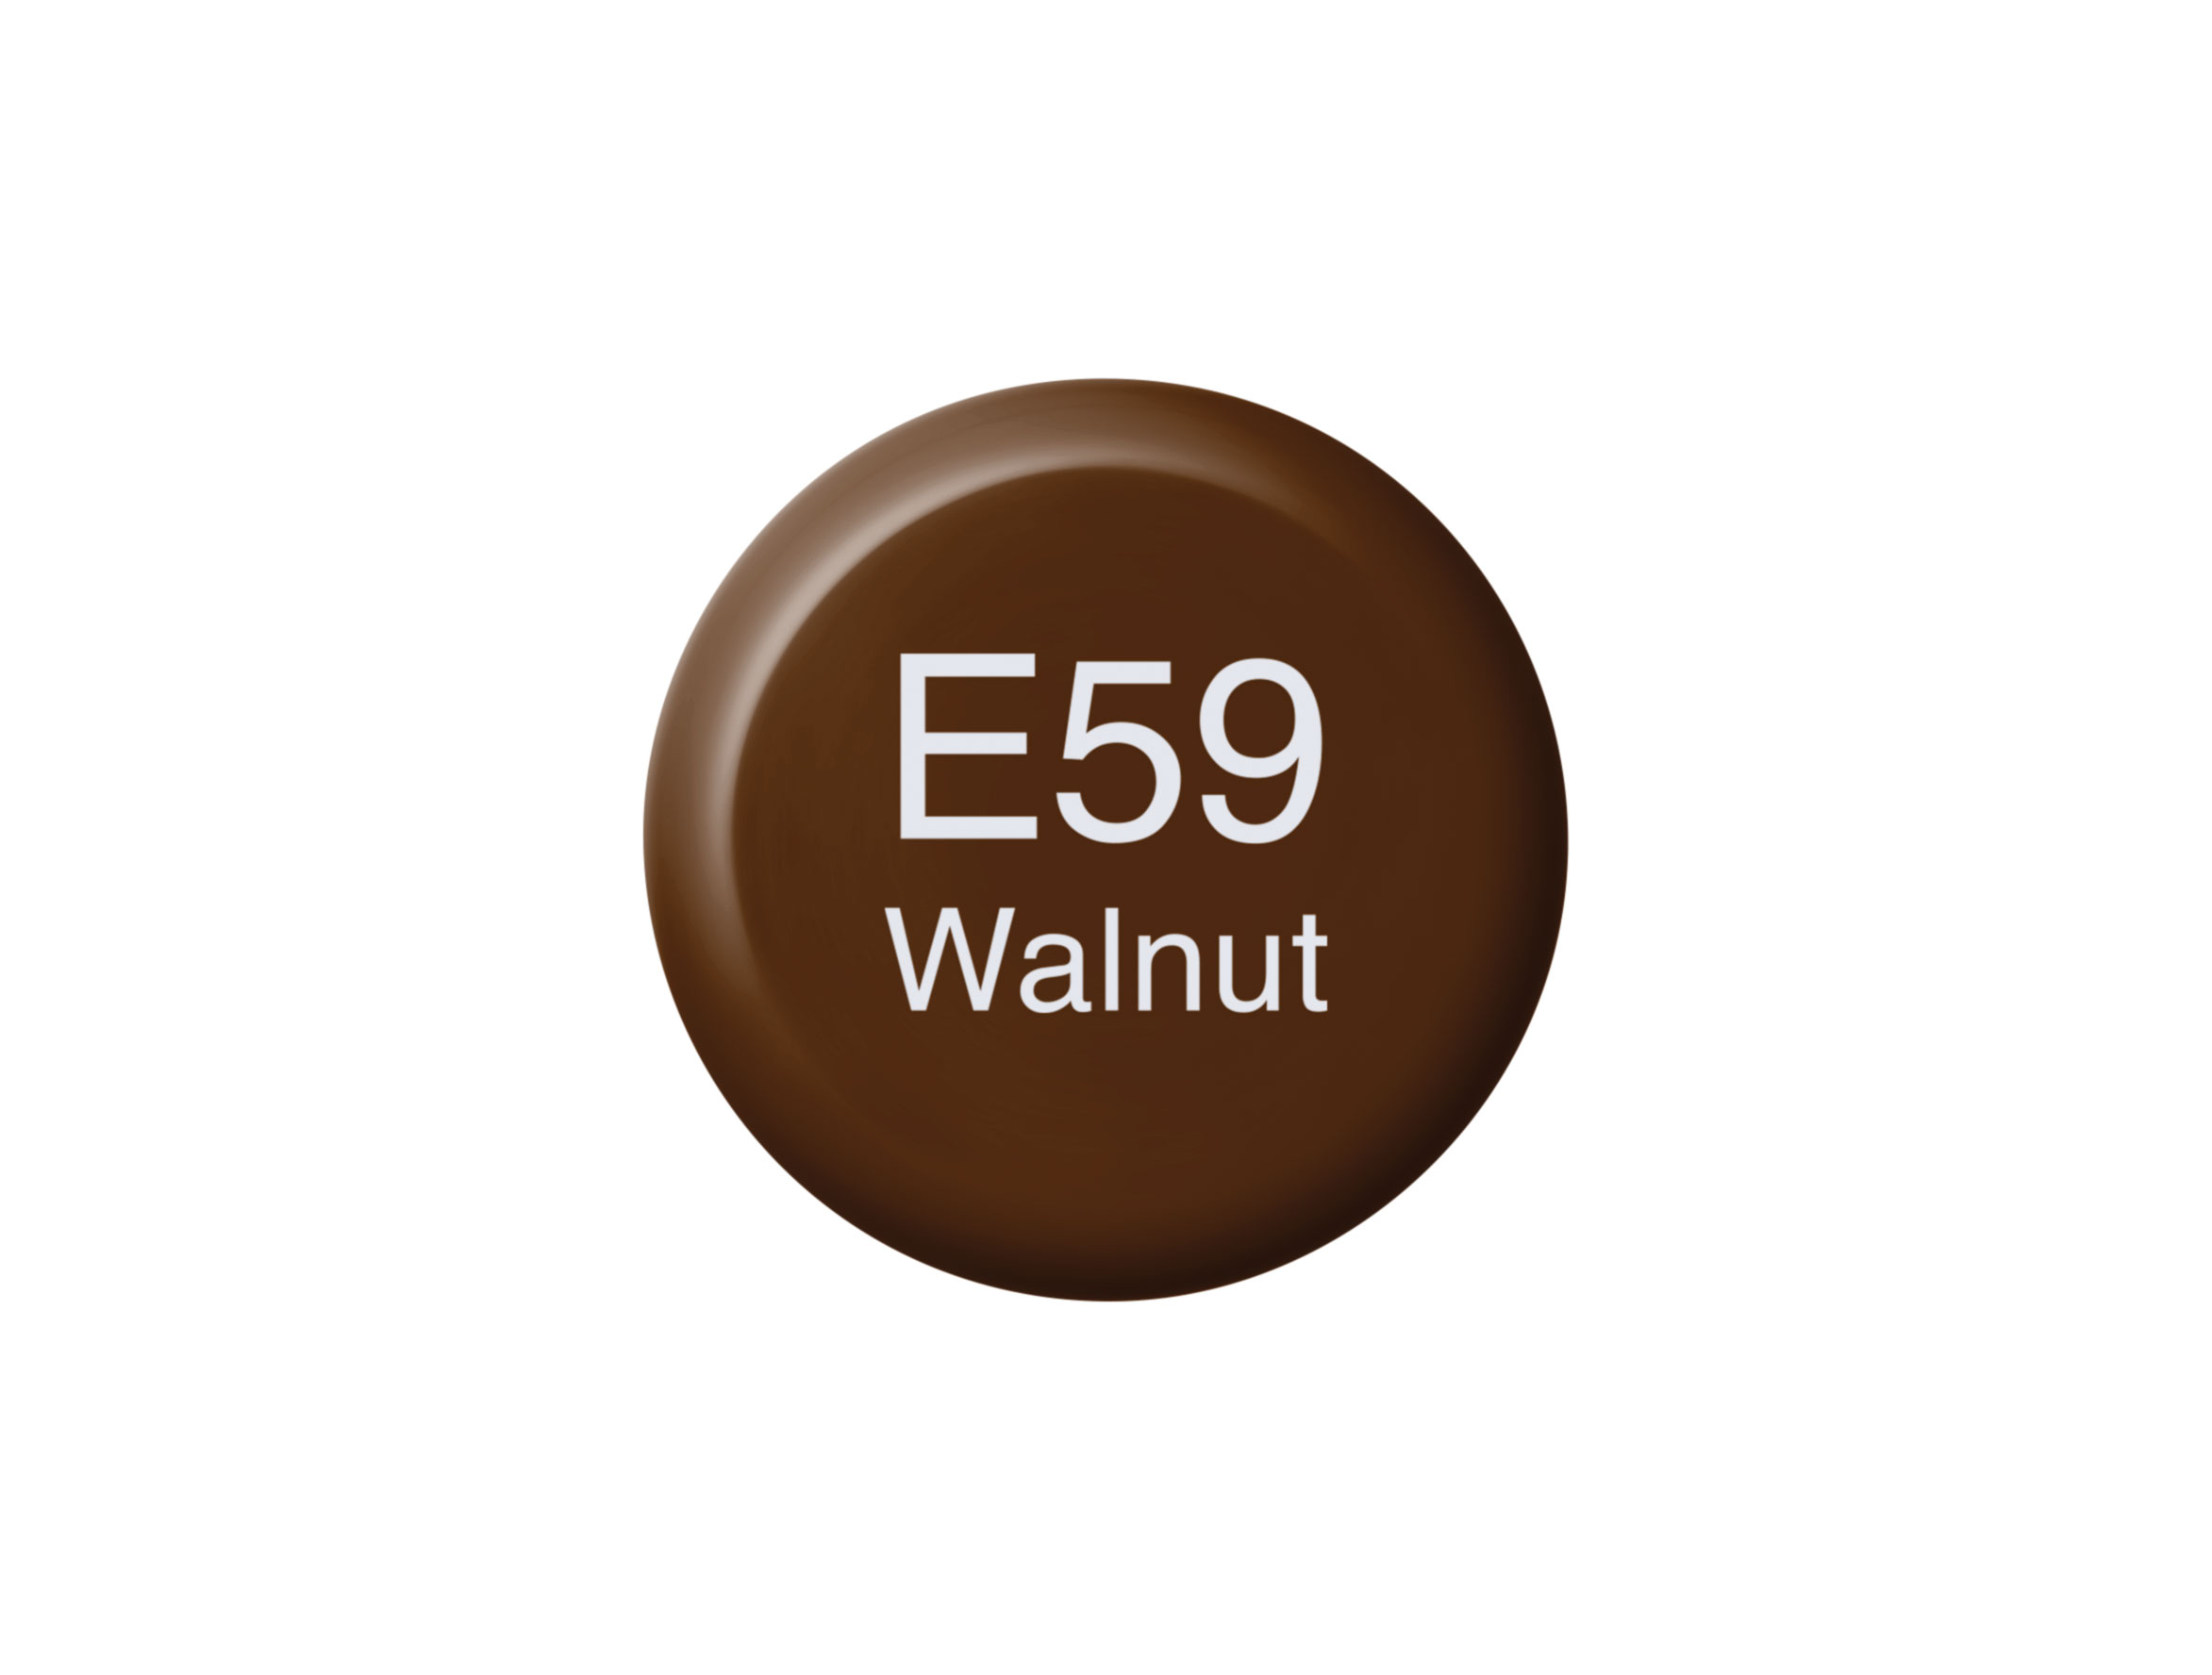 Copic Ink E59 Walnut